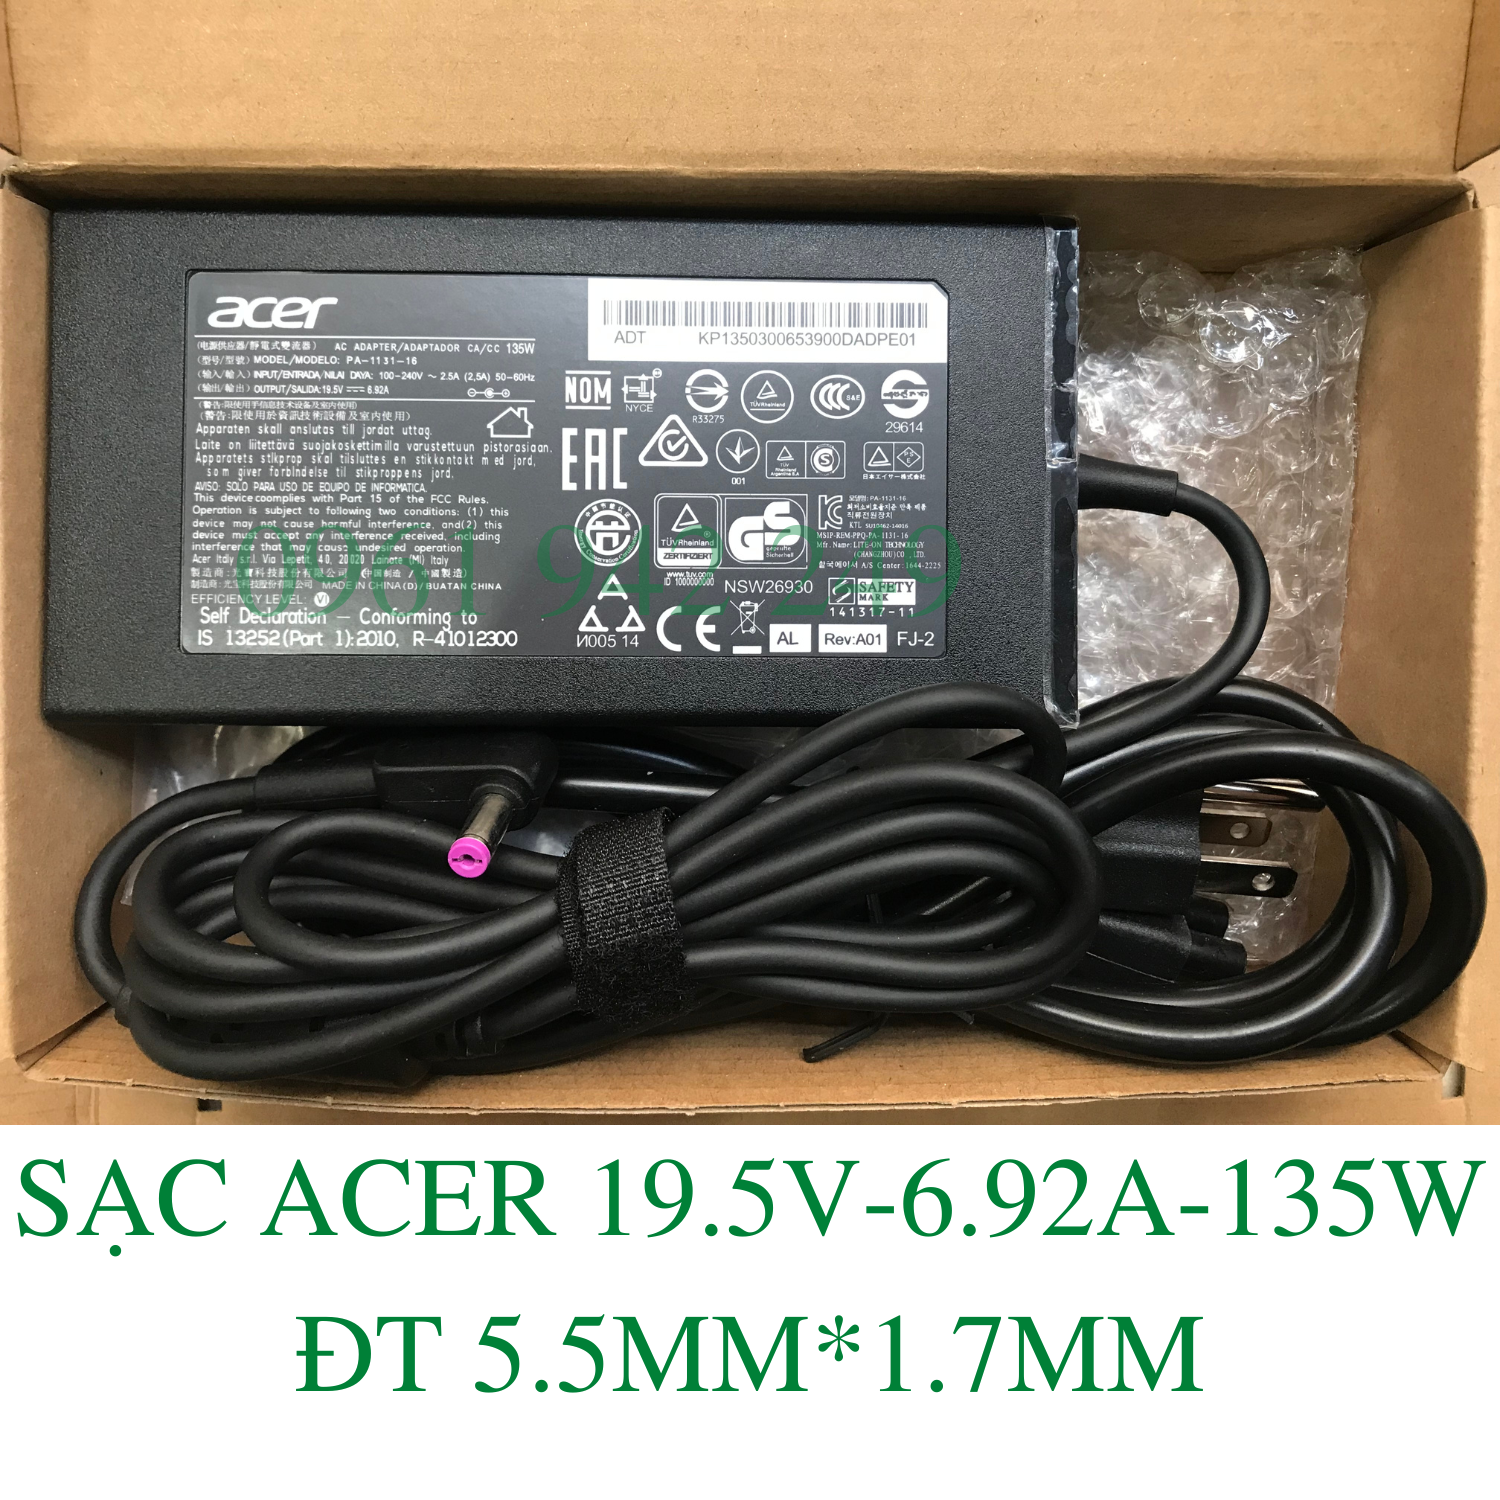 Sạc Laptop Acer, Sạc Acer, Adapter Laptop Acer Original, Acer 19.5V-6.92A-135W-5.5MM*1.7MM PA-1131-16